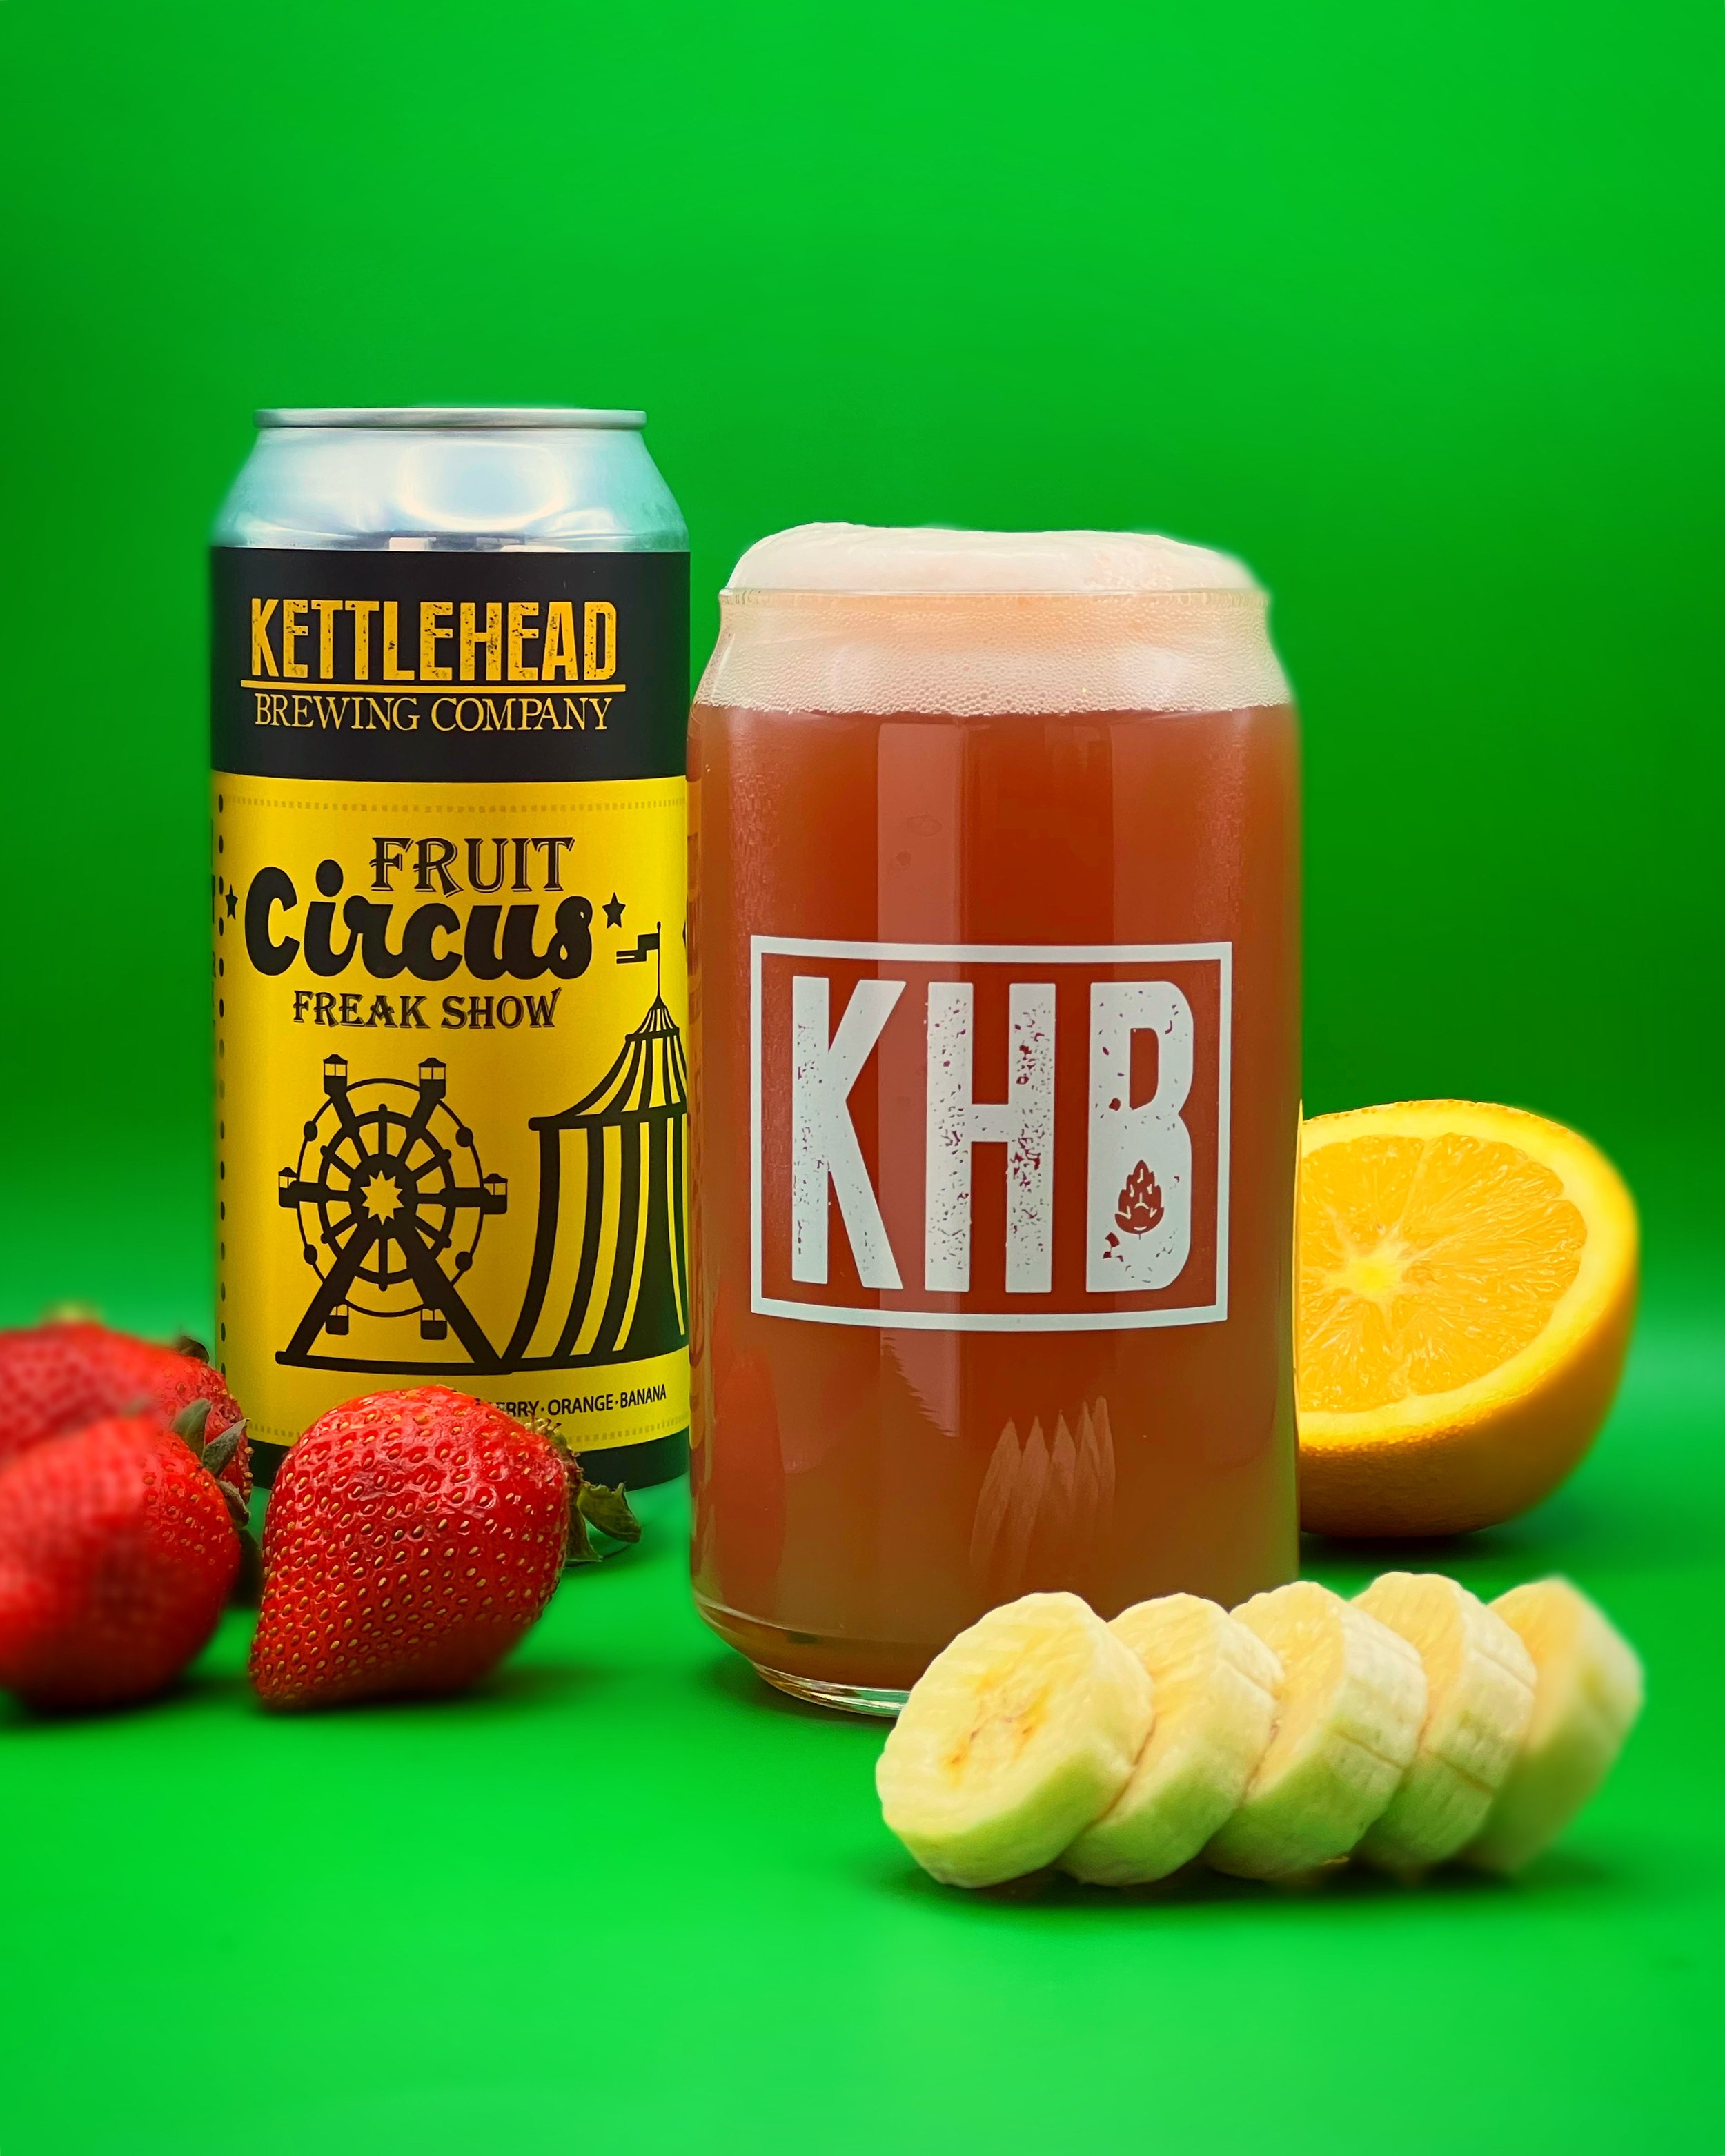 Kettlehead Brewing